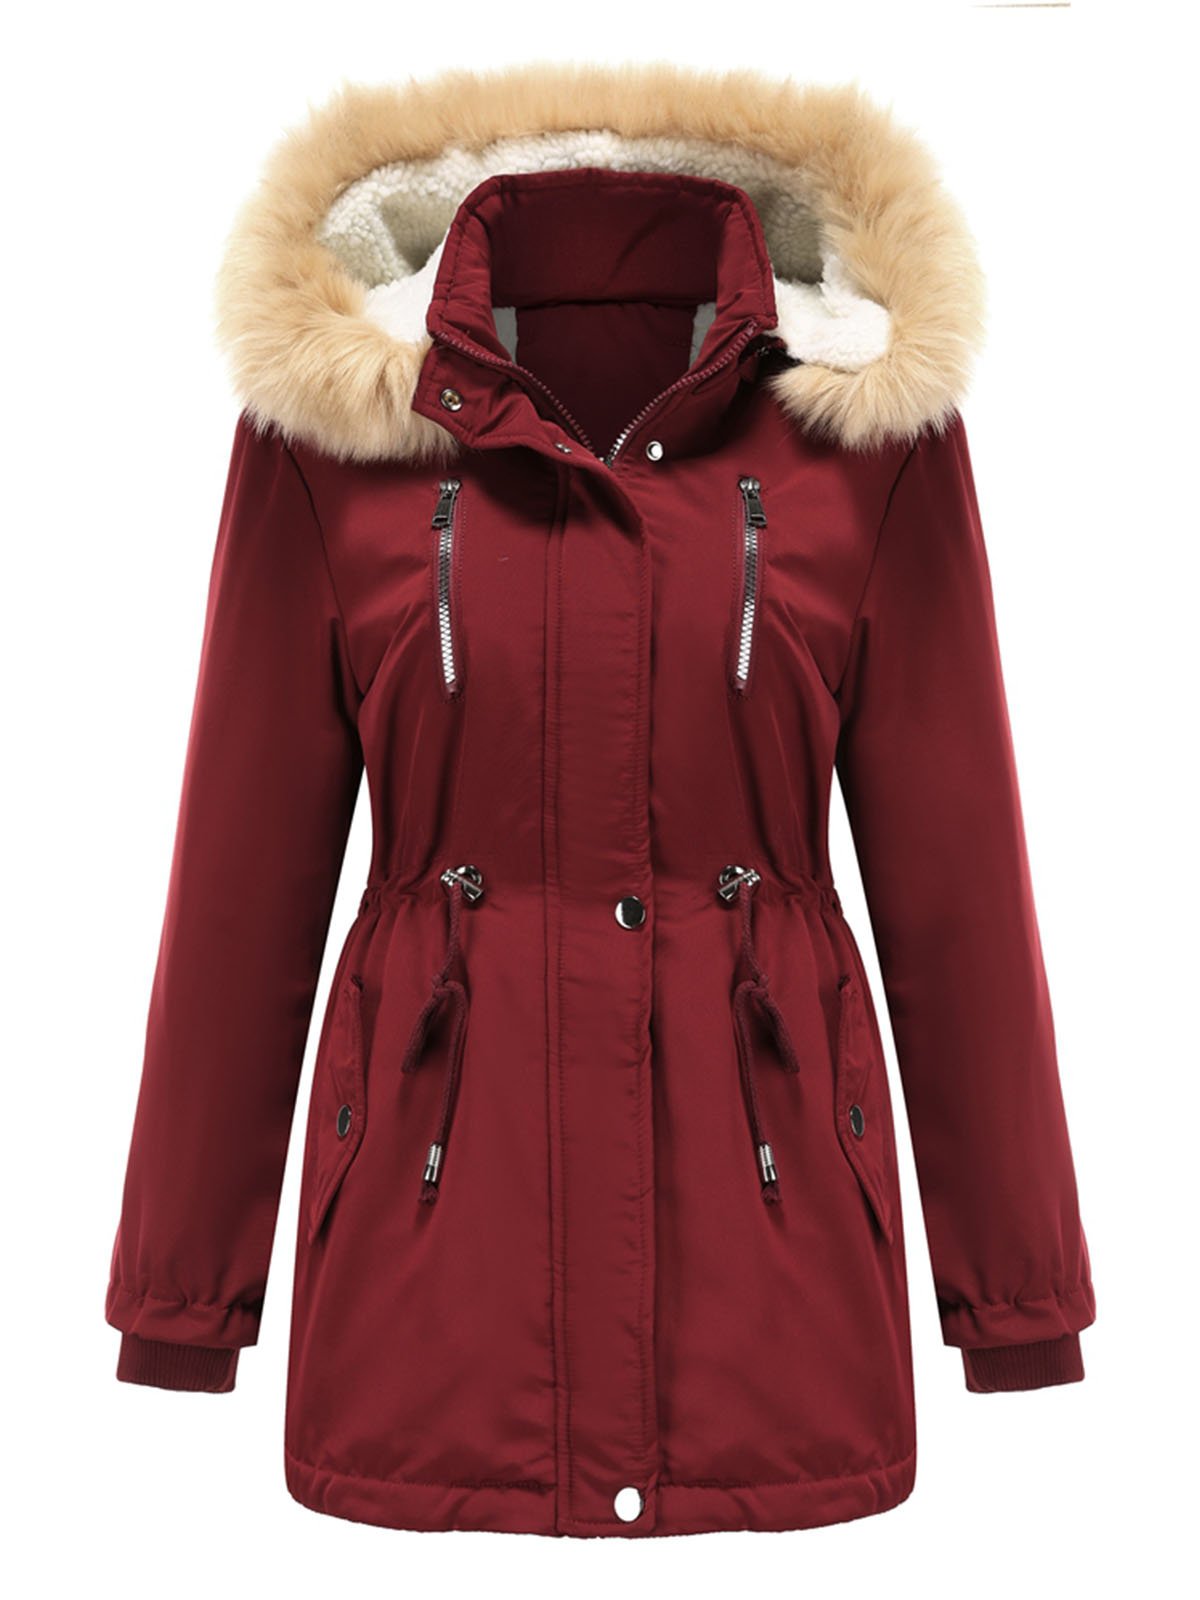 Women's Coat Daily Lamb wool Fall Winter Regular Midi Length Coat Solid Color Oversized Coat 